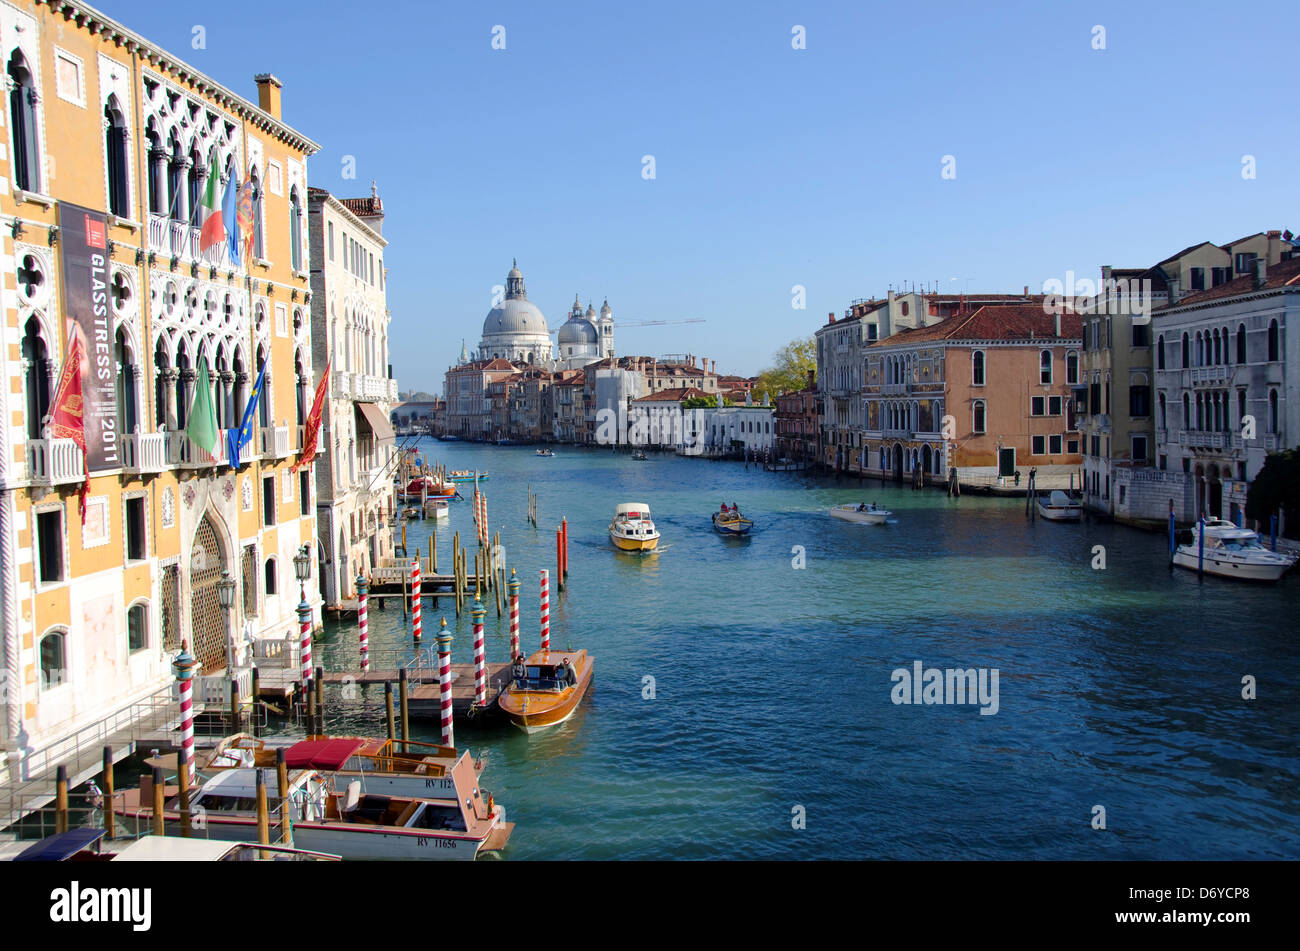 Gondolas in a canal with a church in the background, Santa Maria Della Salute, Grand Canal, Venice, Veneto, Italy Stock Photo